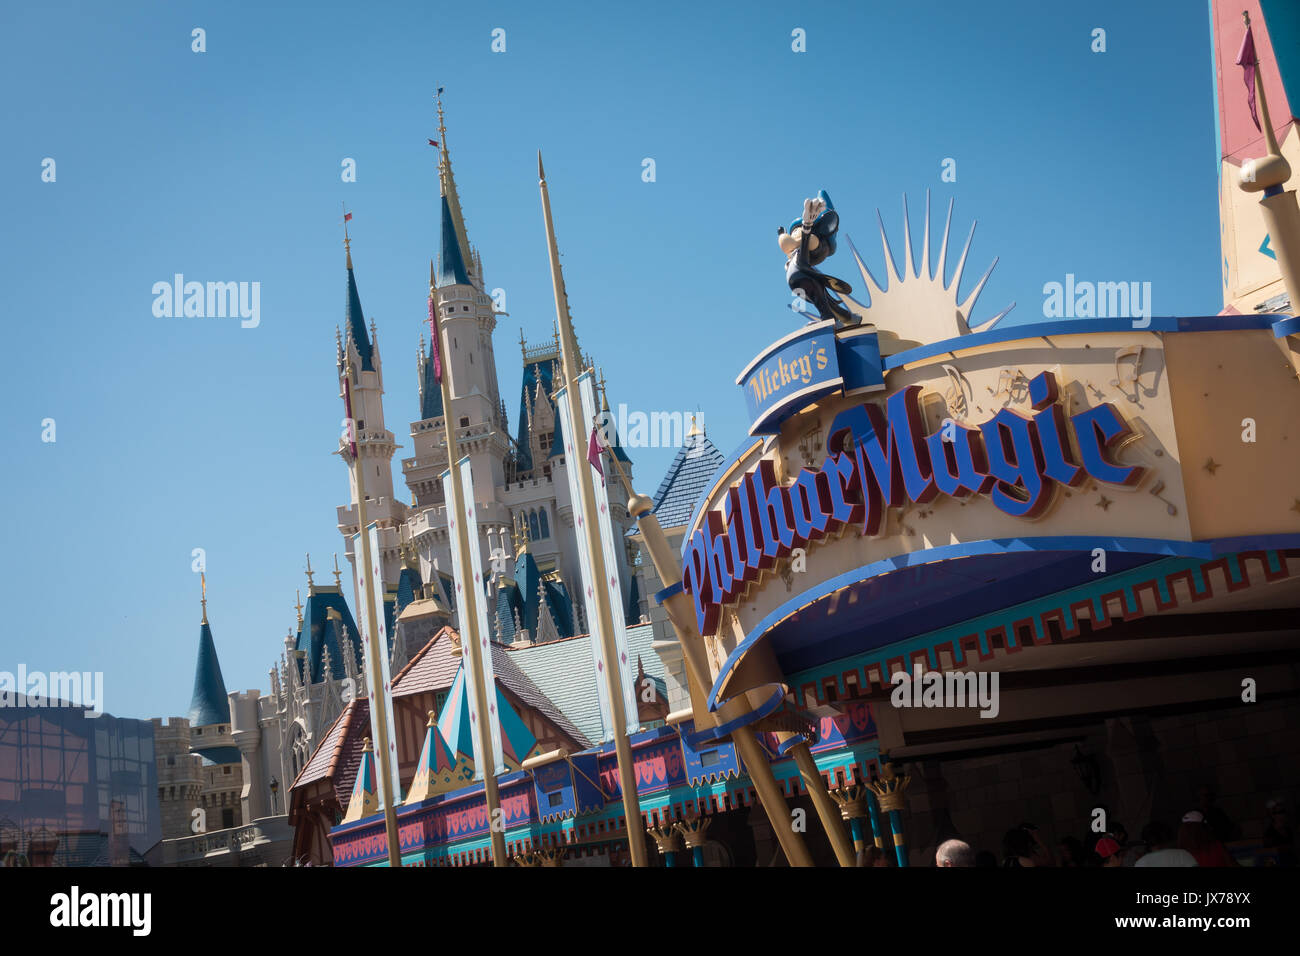 Entrance to Mickeys PhilharMagic show in Fantasyland, Magic Kingdom, Orlando, Florida. Stock Photo